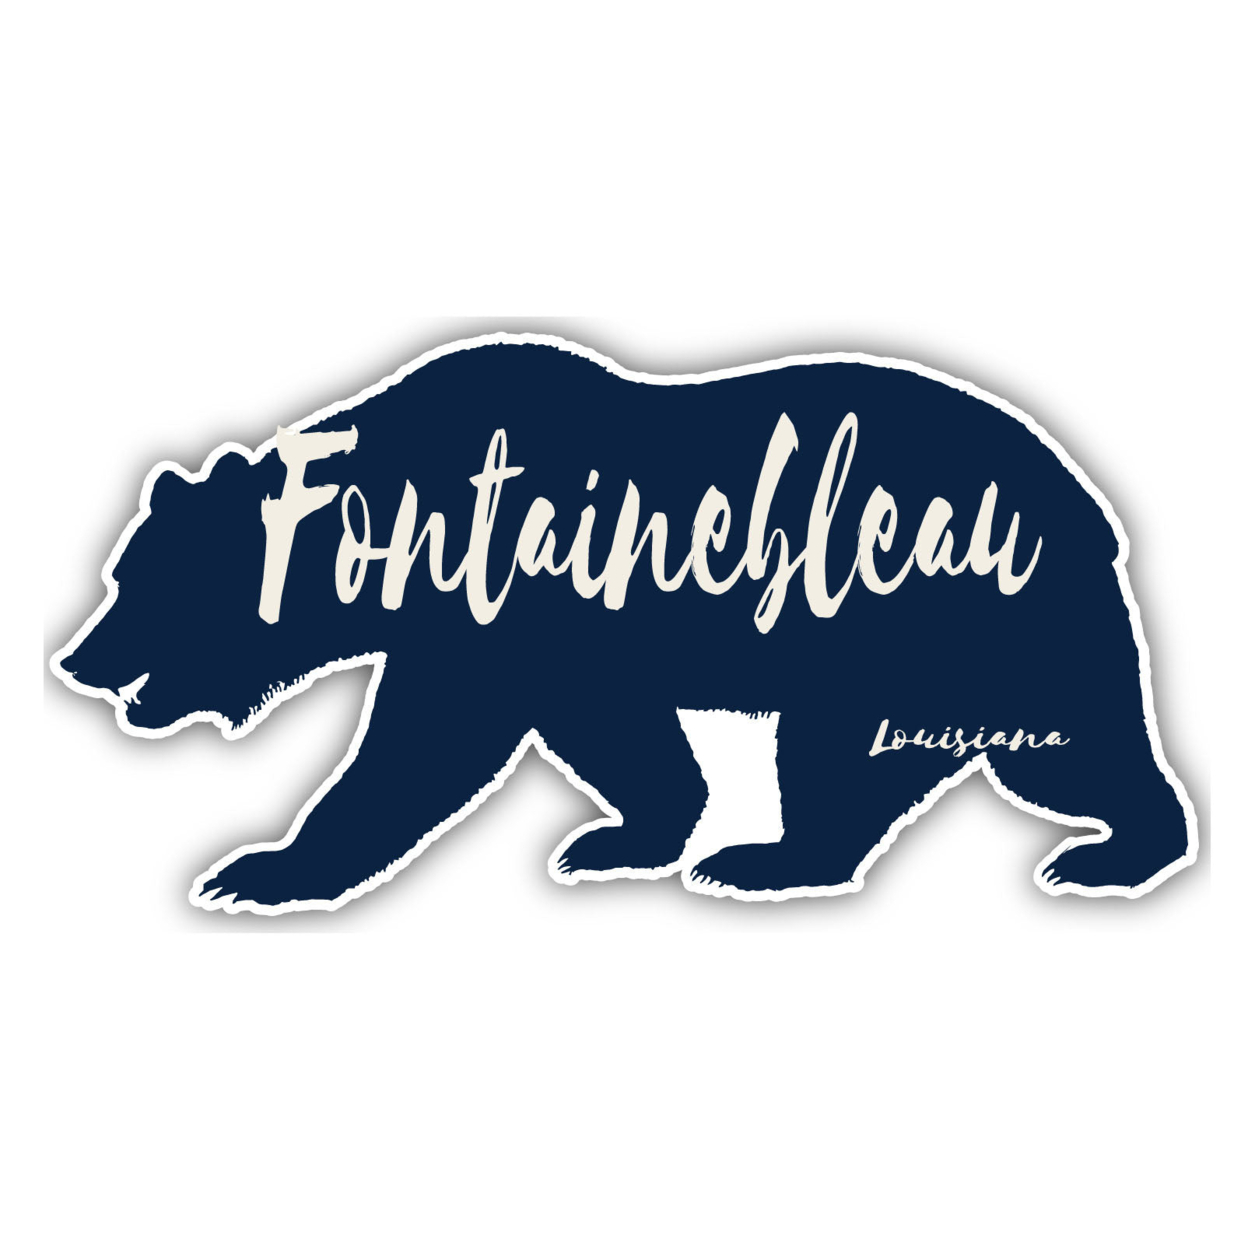 Fontainebleau Louisiana Souvenir Decorative Stickers (Choose Theme And Size) - Single Unit, 2-Inch, Bear